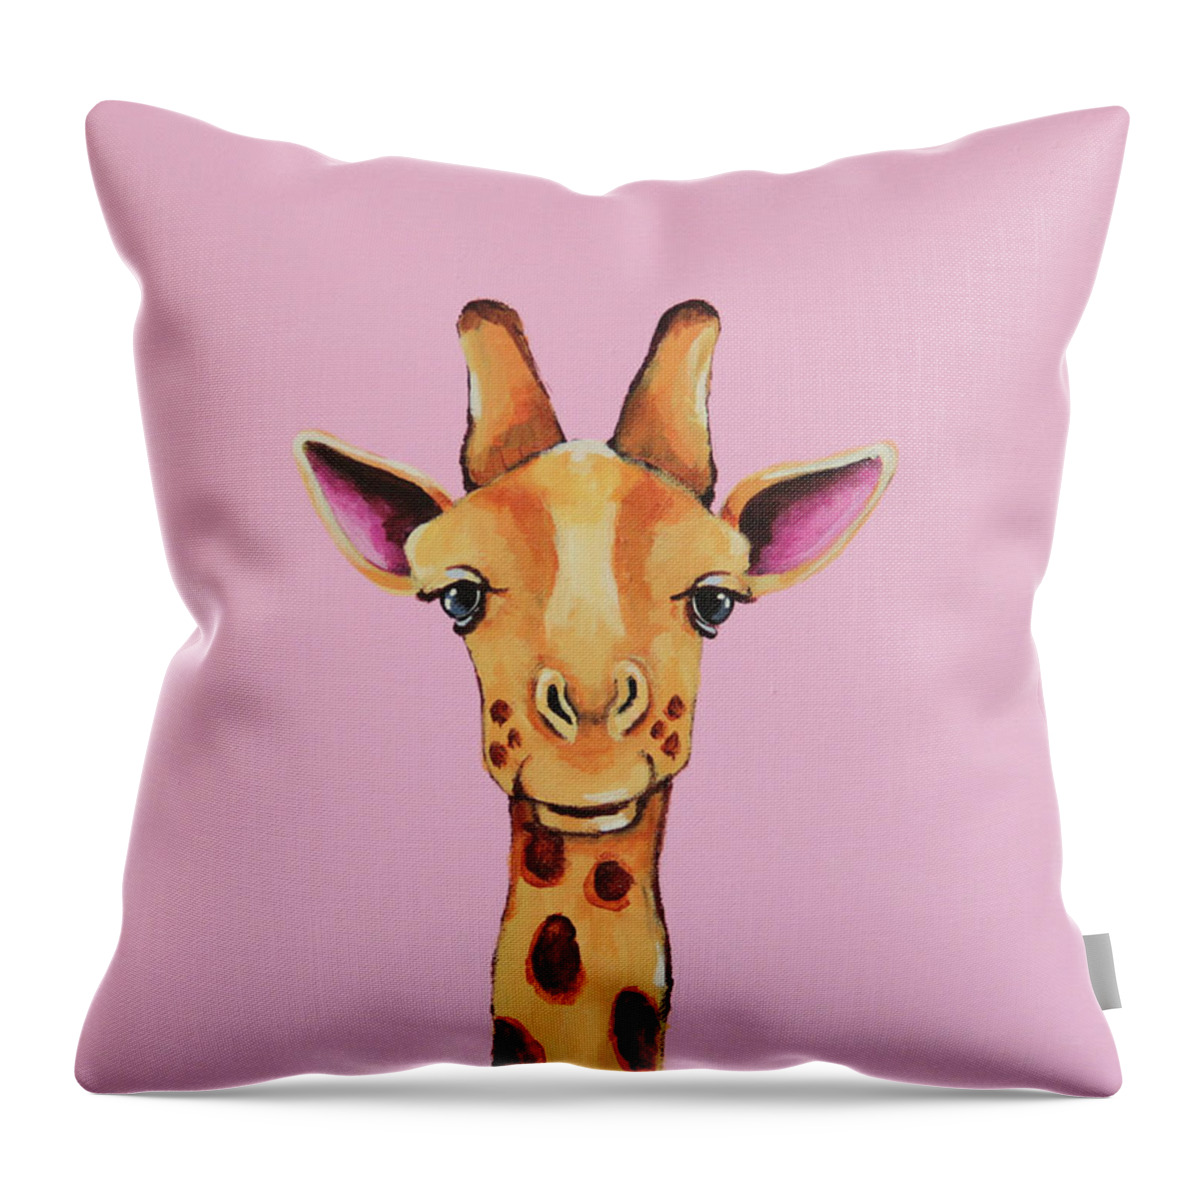 Giraffe Throw Pillow featuring the painting Baby Giraffe by Lucia Stewart